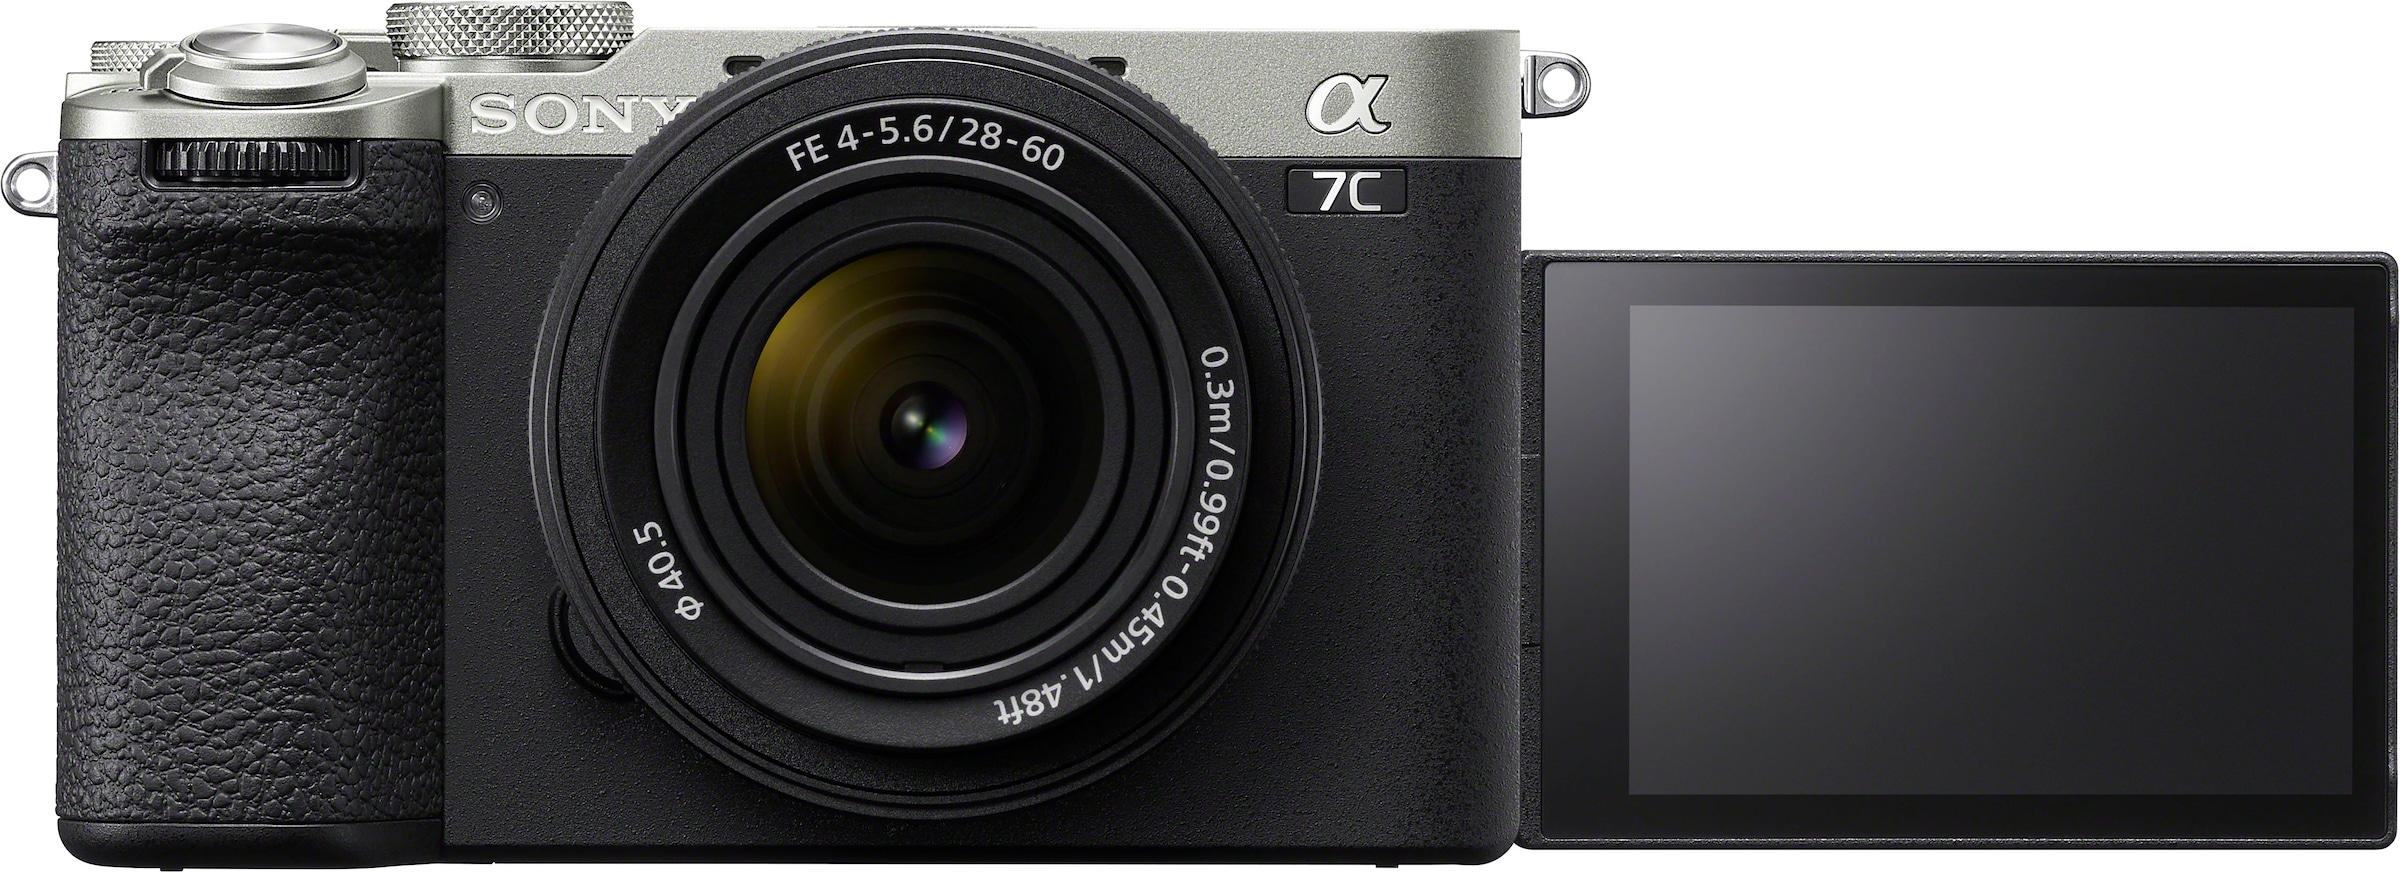 Sony Systemkamera »Alpha 33 fachx MP, 28-60mm f4-5.6, opt. Bluetooth-WLAN-NFC 7C II«, online Zoom, 2,1 FE kaufen